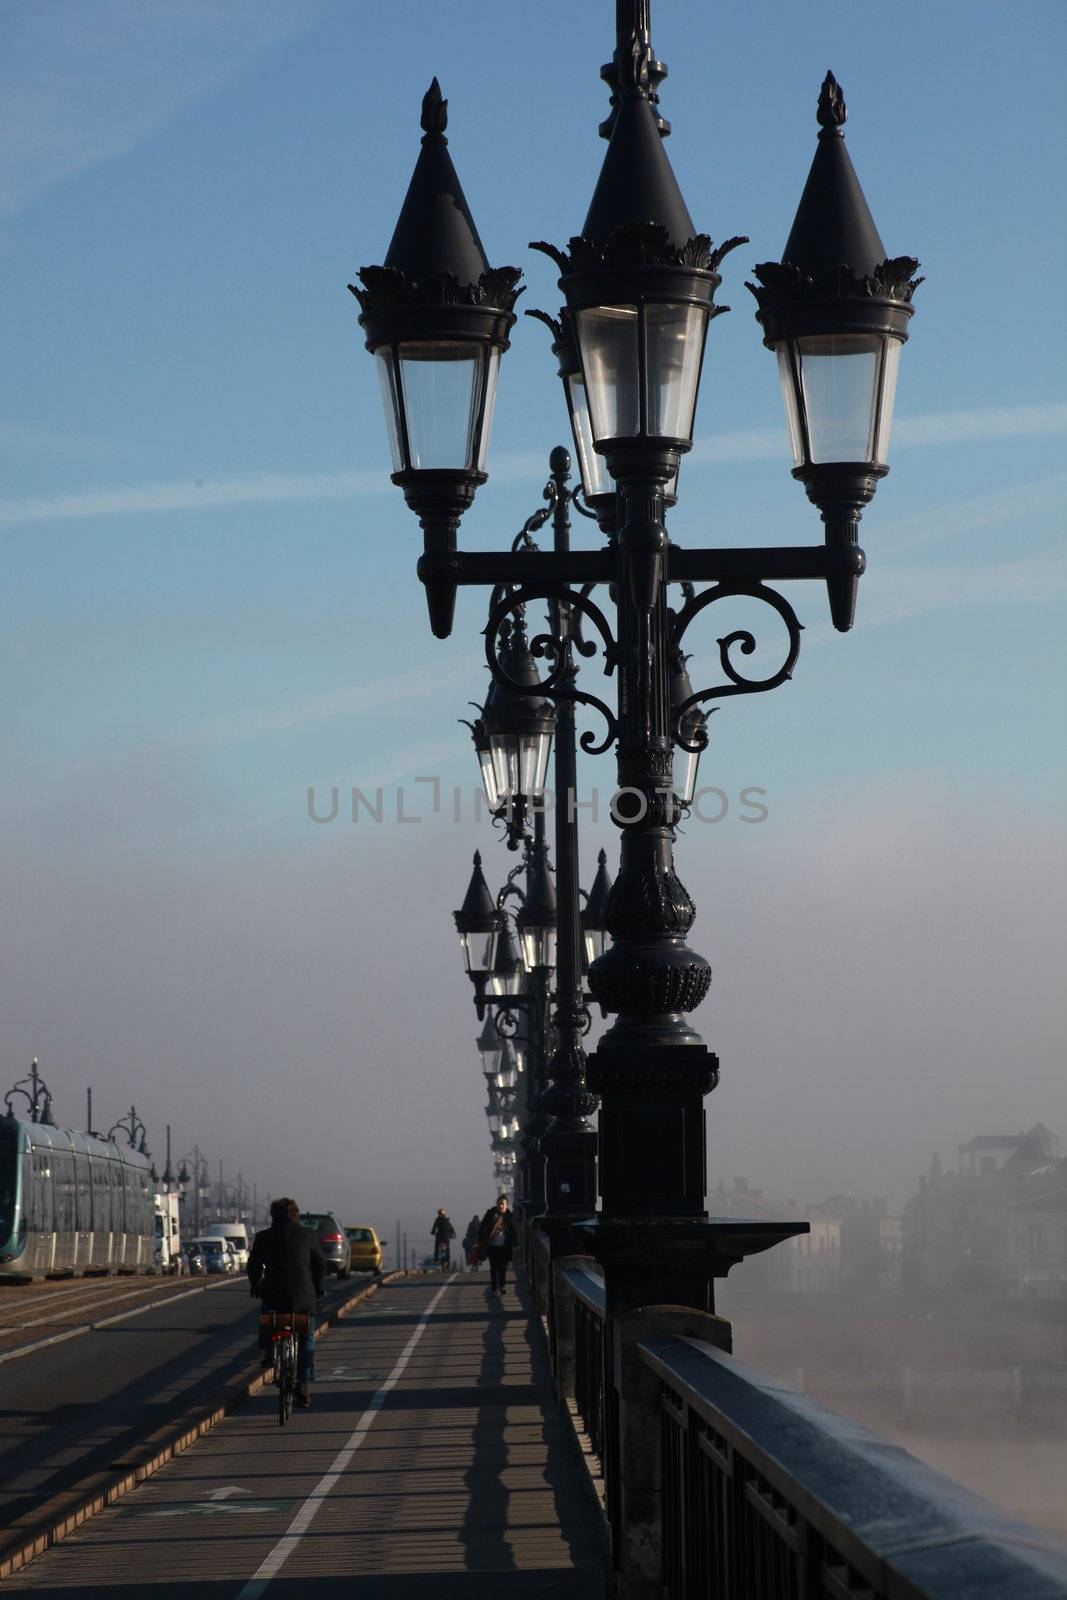 Lamp on a bridge by phovoir